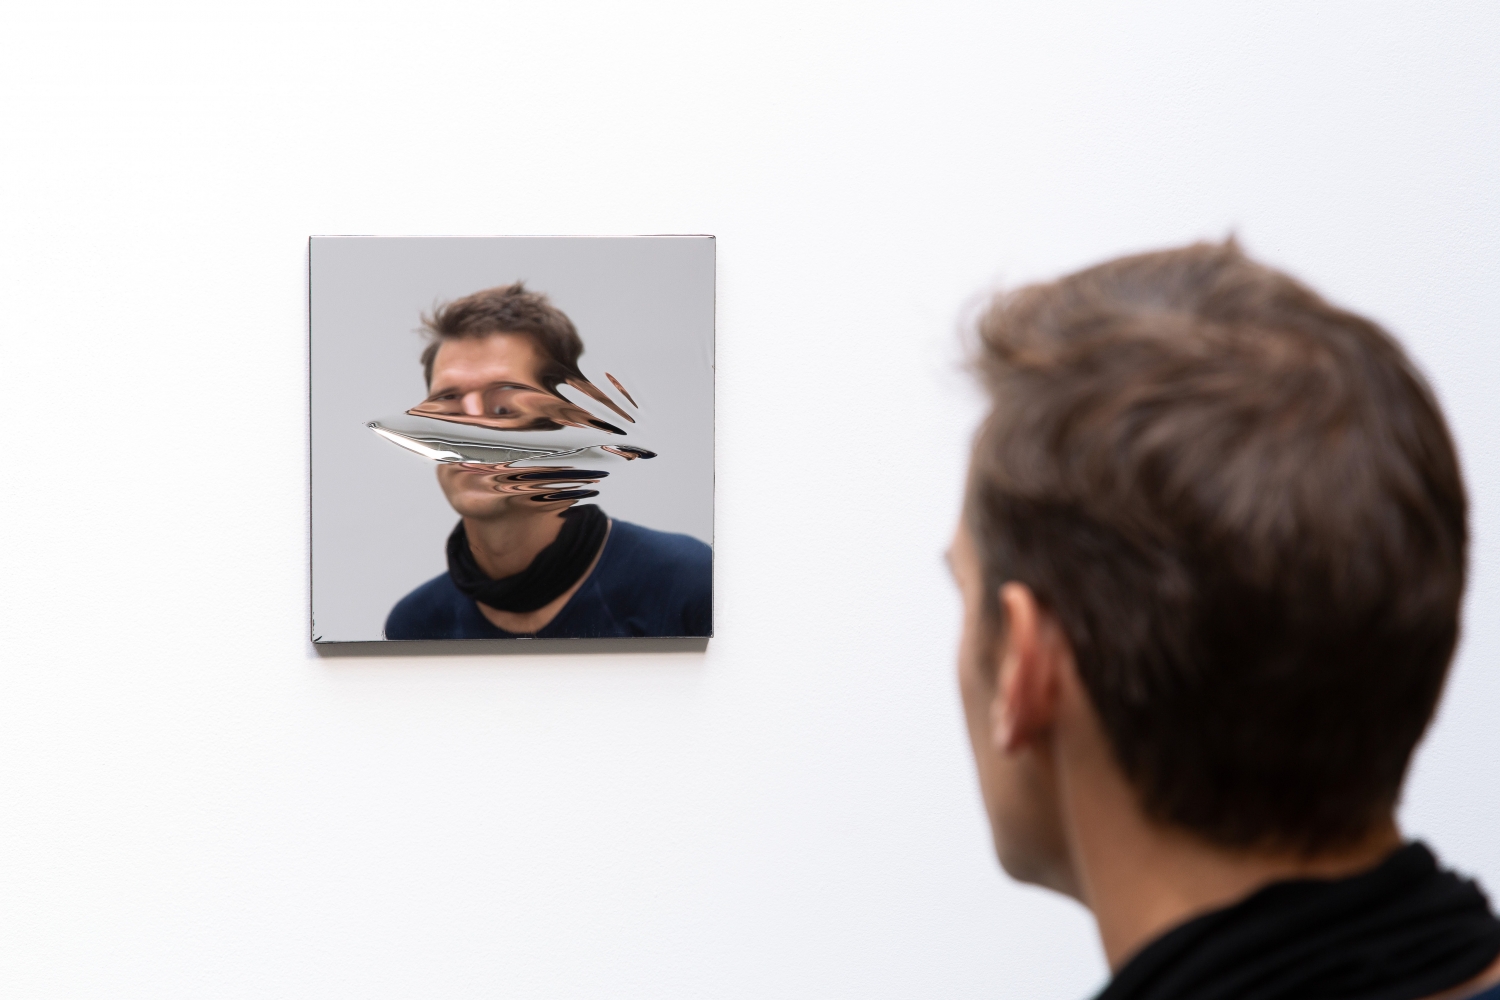 Jeppe Hein

My Mirror #13

2020

Mirror foil on aluminum frame

11 7/8 x 11 7/8 inches (30 x 30 cm)

Unique

JH 576

&amp;nbsp;

INQUIRE